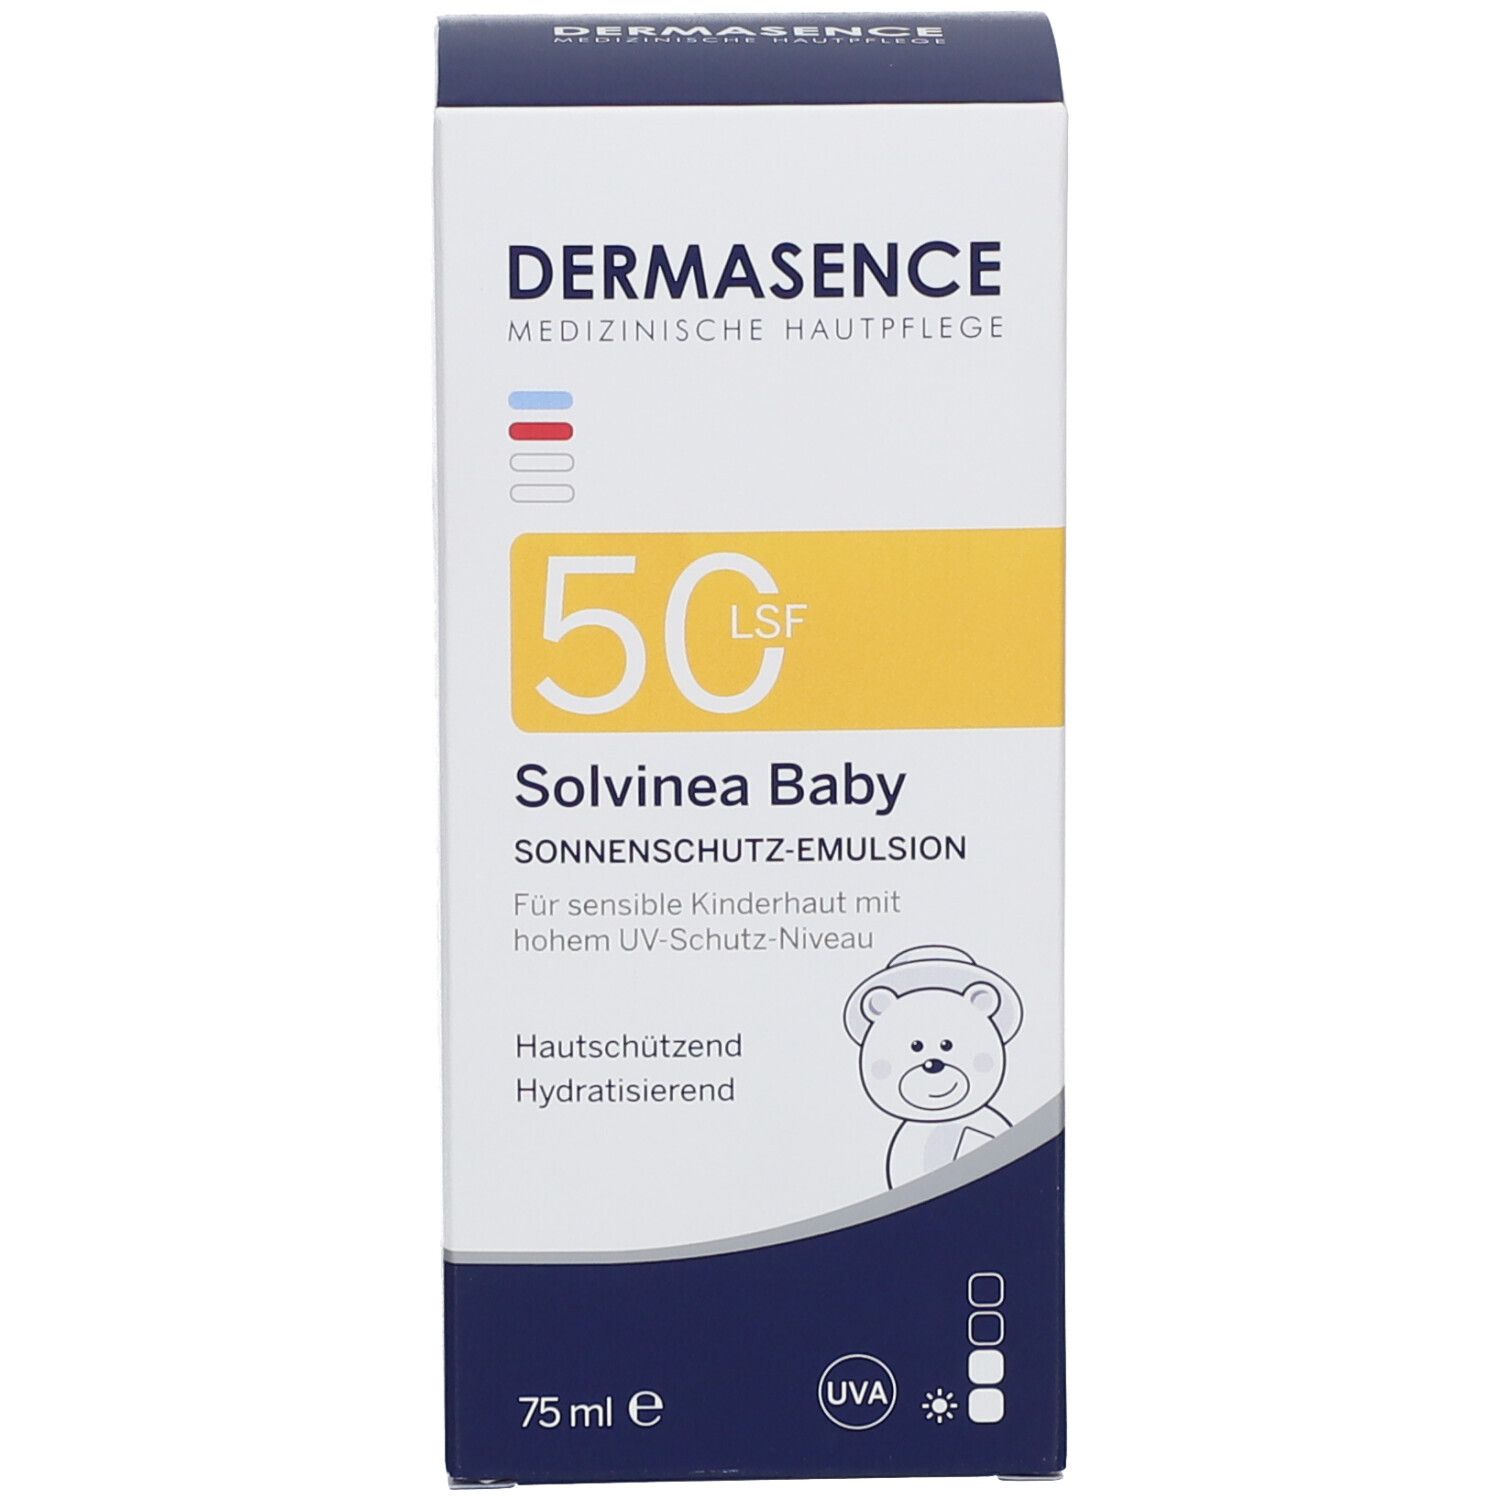 Dermasence Solvinea Baby Creme LSF 50